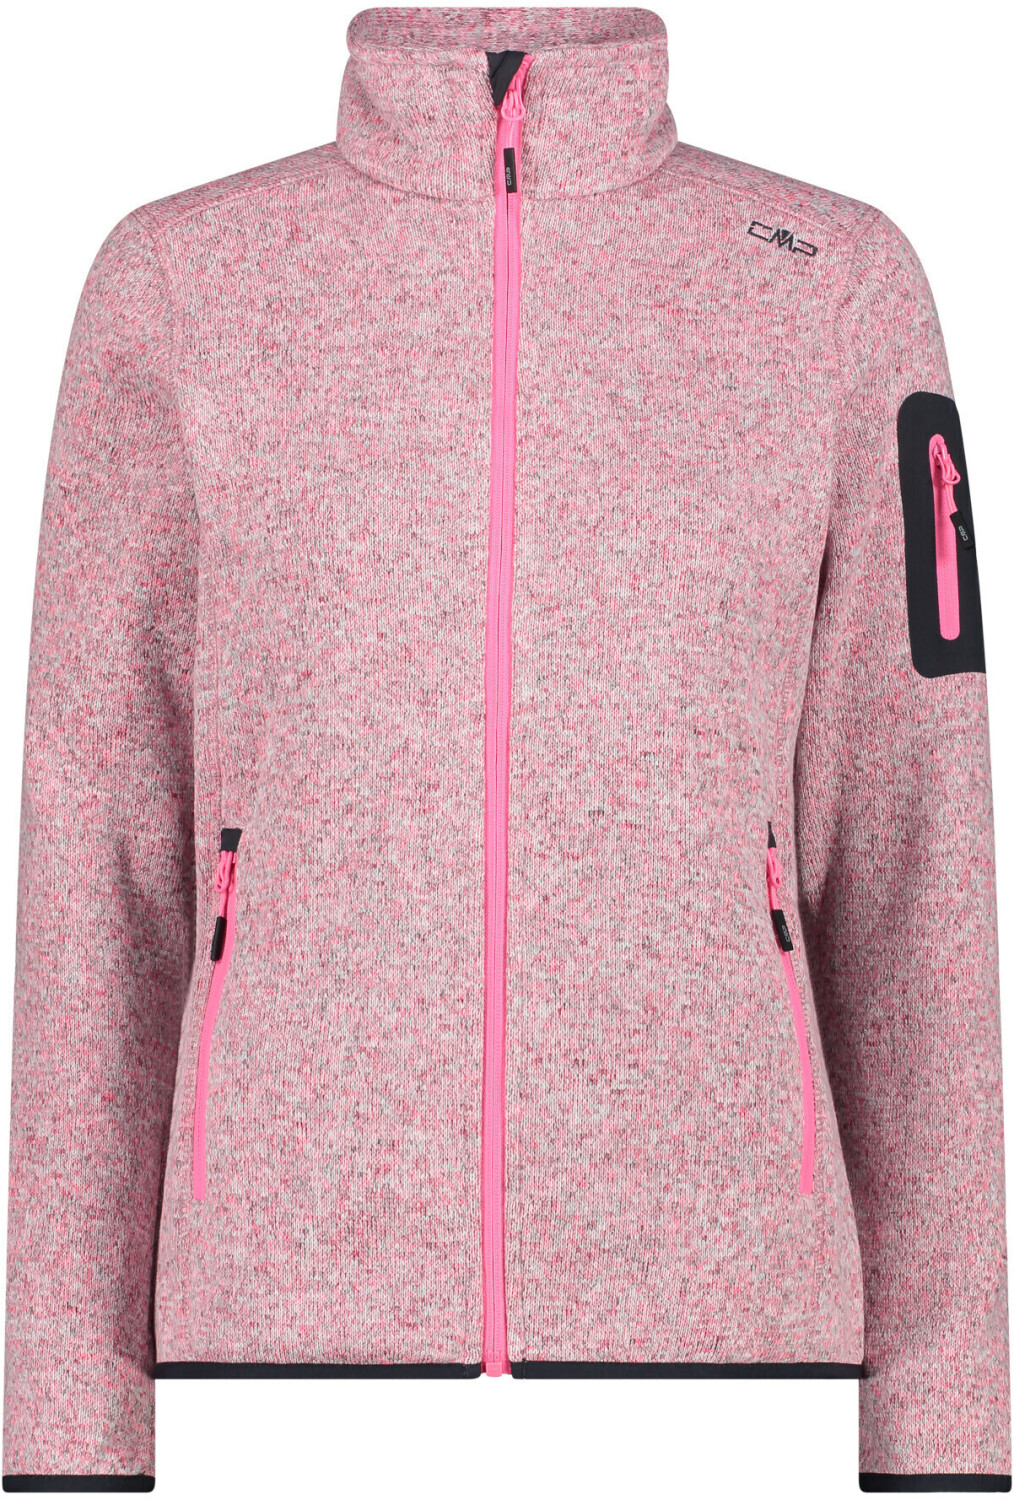 on £34.99 Knit-Tech pink (3H14746) Deals Jacket fluo-bianco Fleece Best from Buy Melange – (Today) CMP